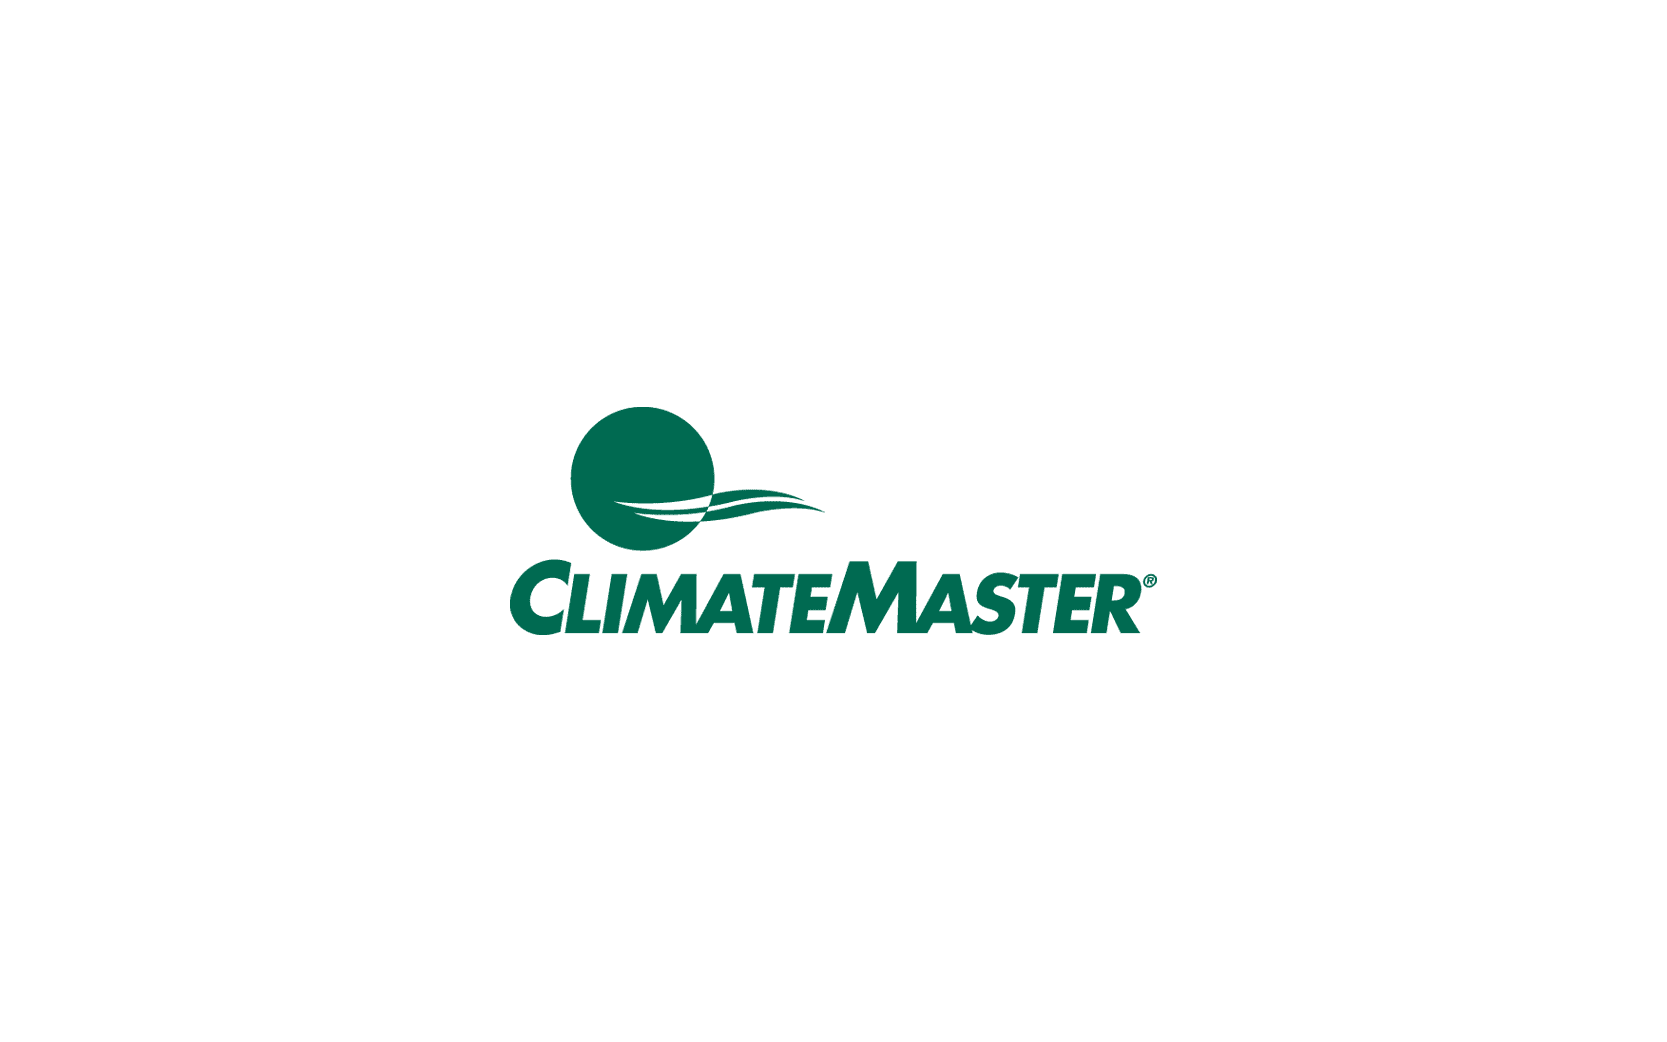 ClimateMaster